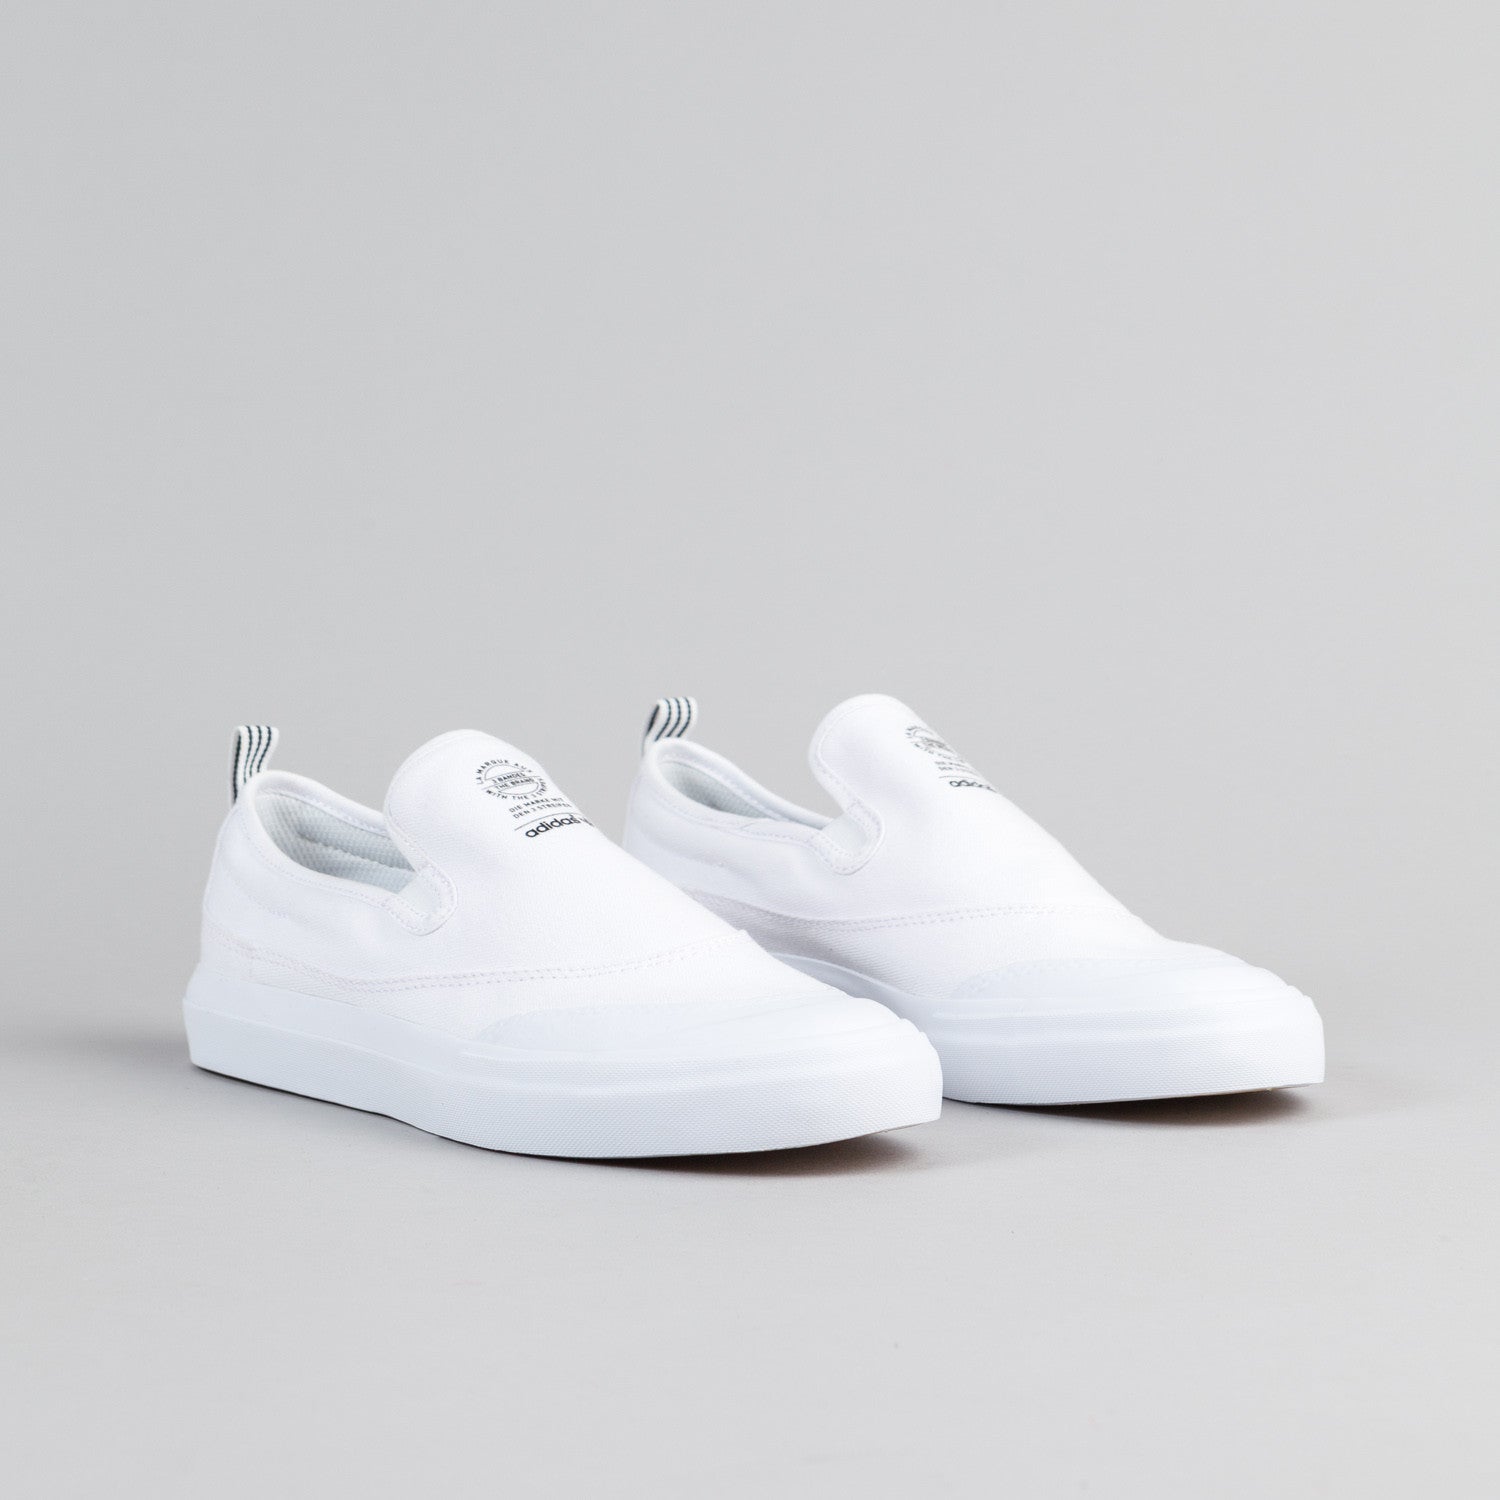 Adidas Matchcourt Slip On Shoes - FTW White / FTW White / FTW White ...